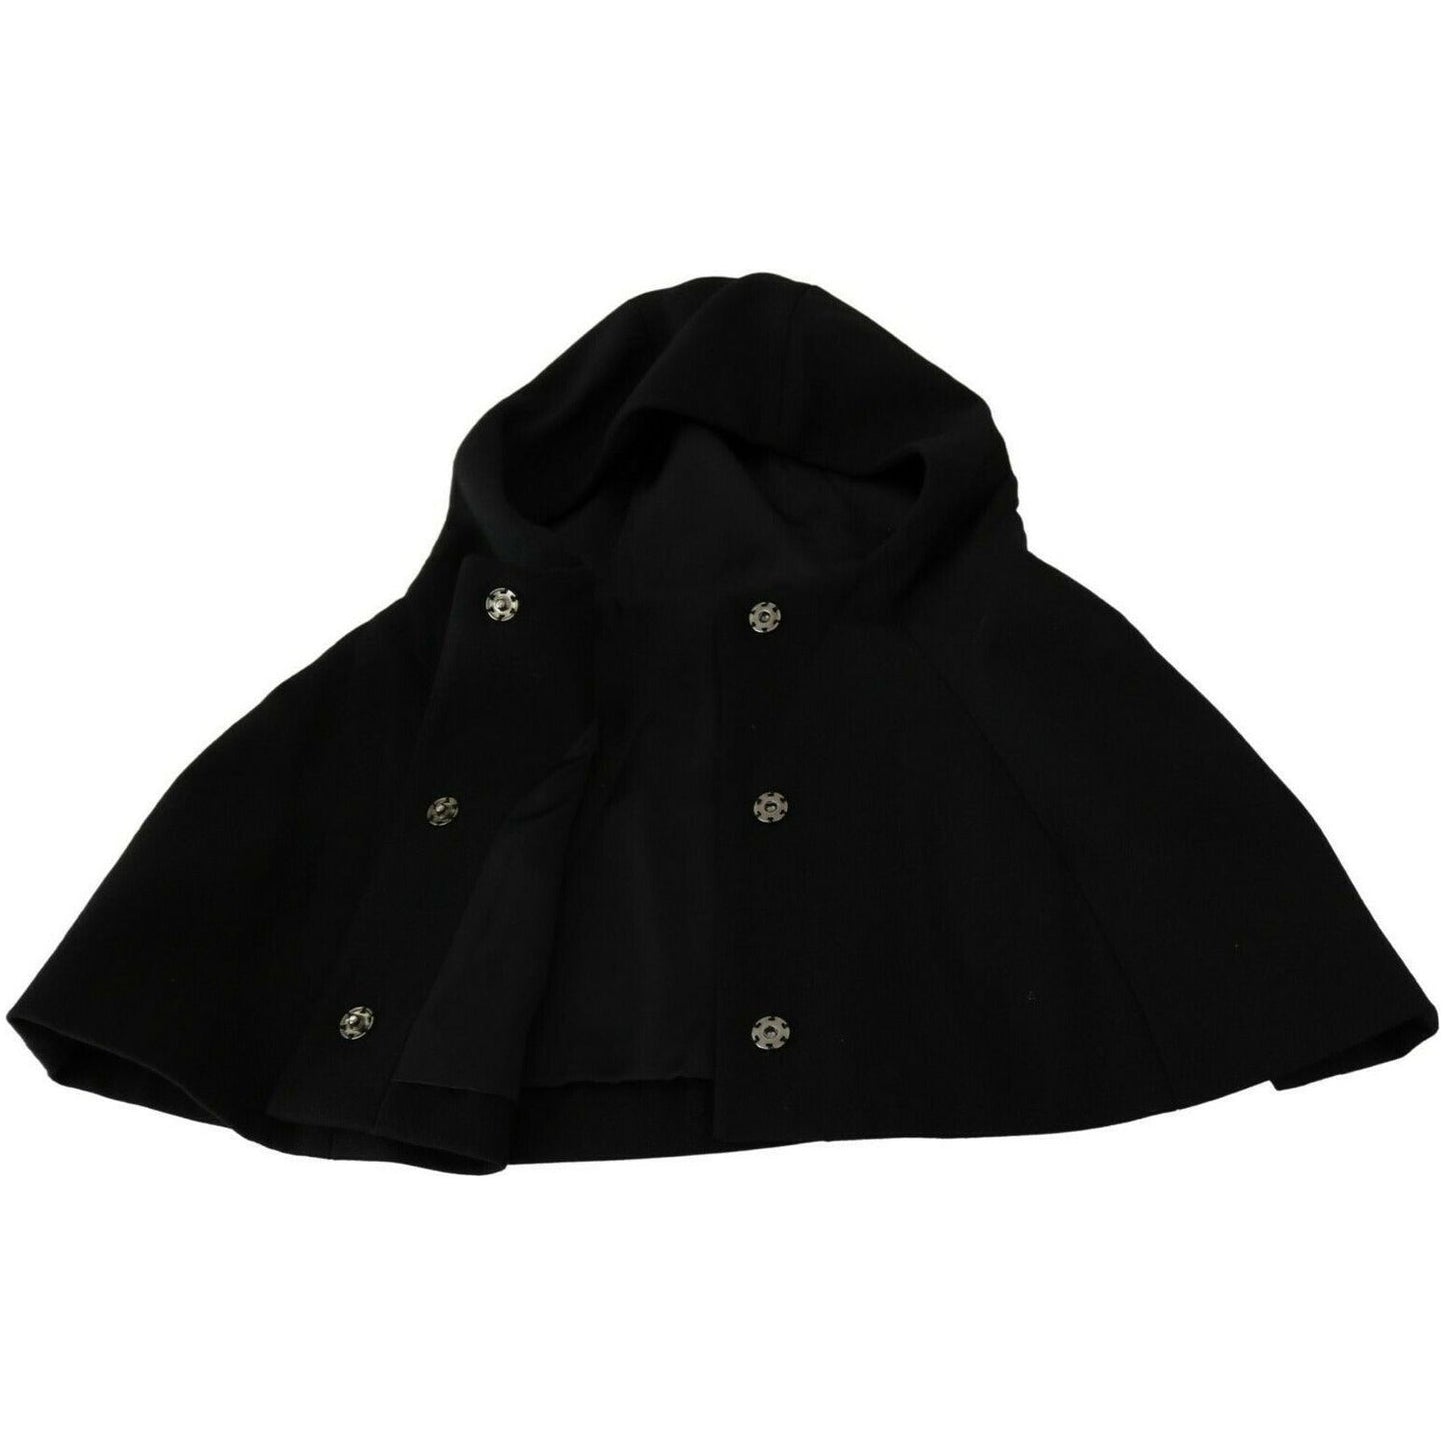 Dolce & Gabbana Elegant Black Hooded Scarf Wrap Hood Scarf black-wool-whole-head-hooded-scarf-hat